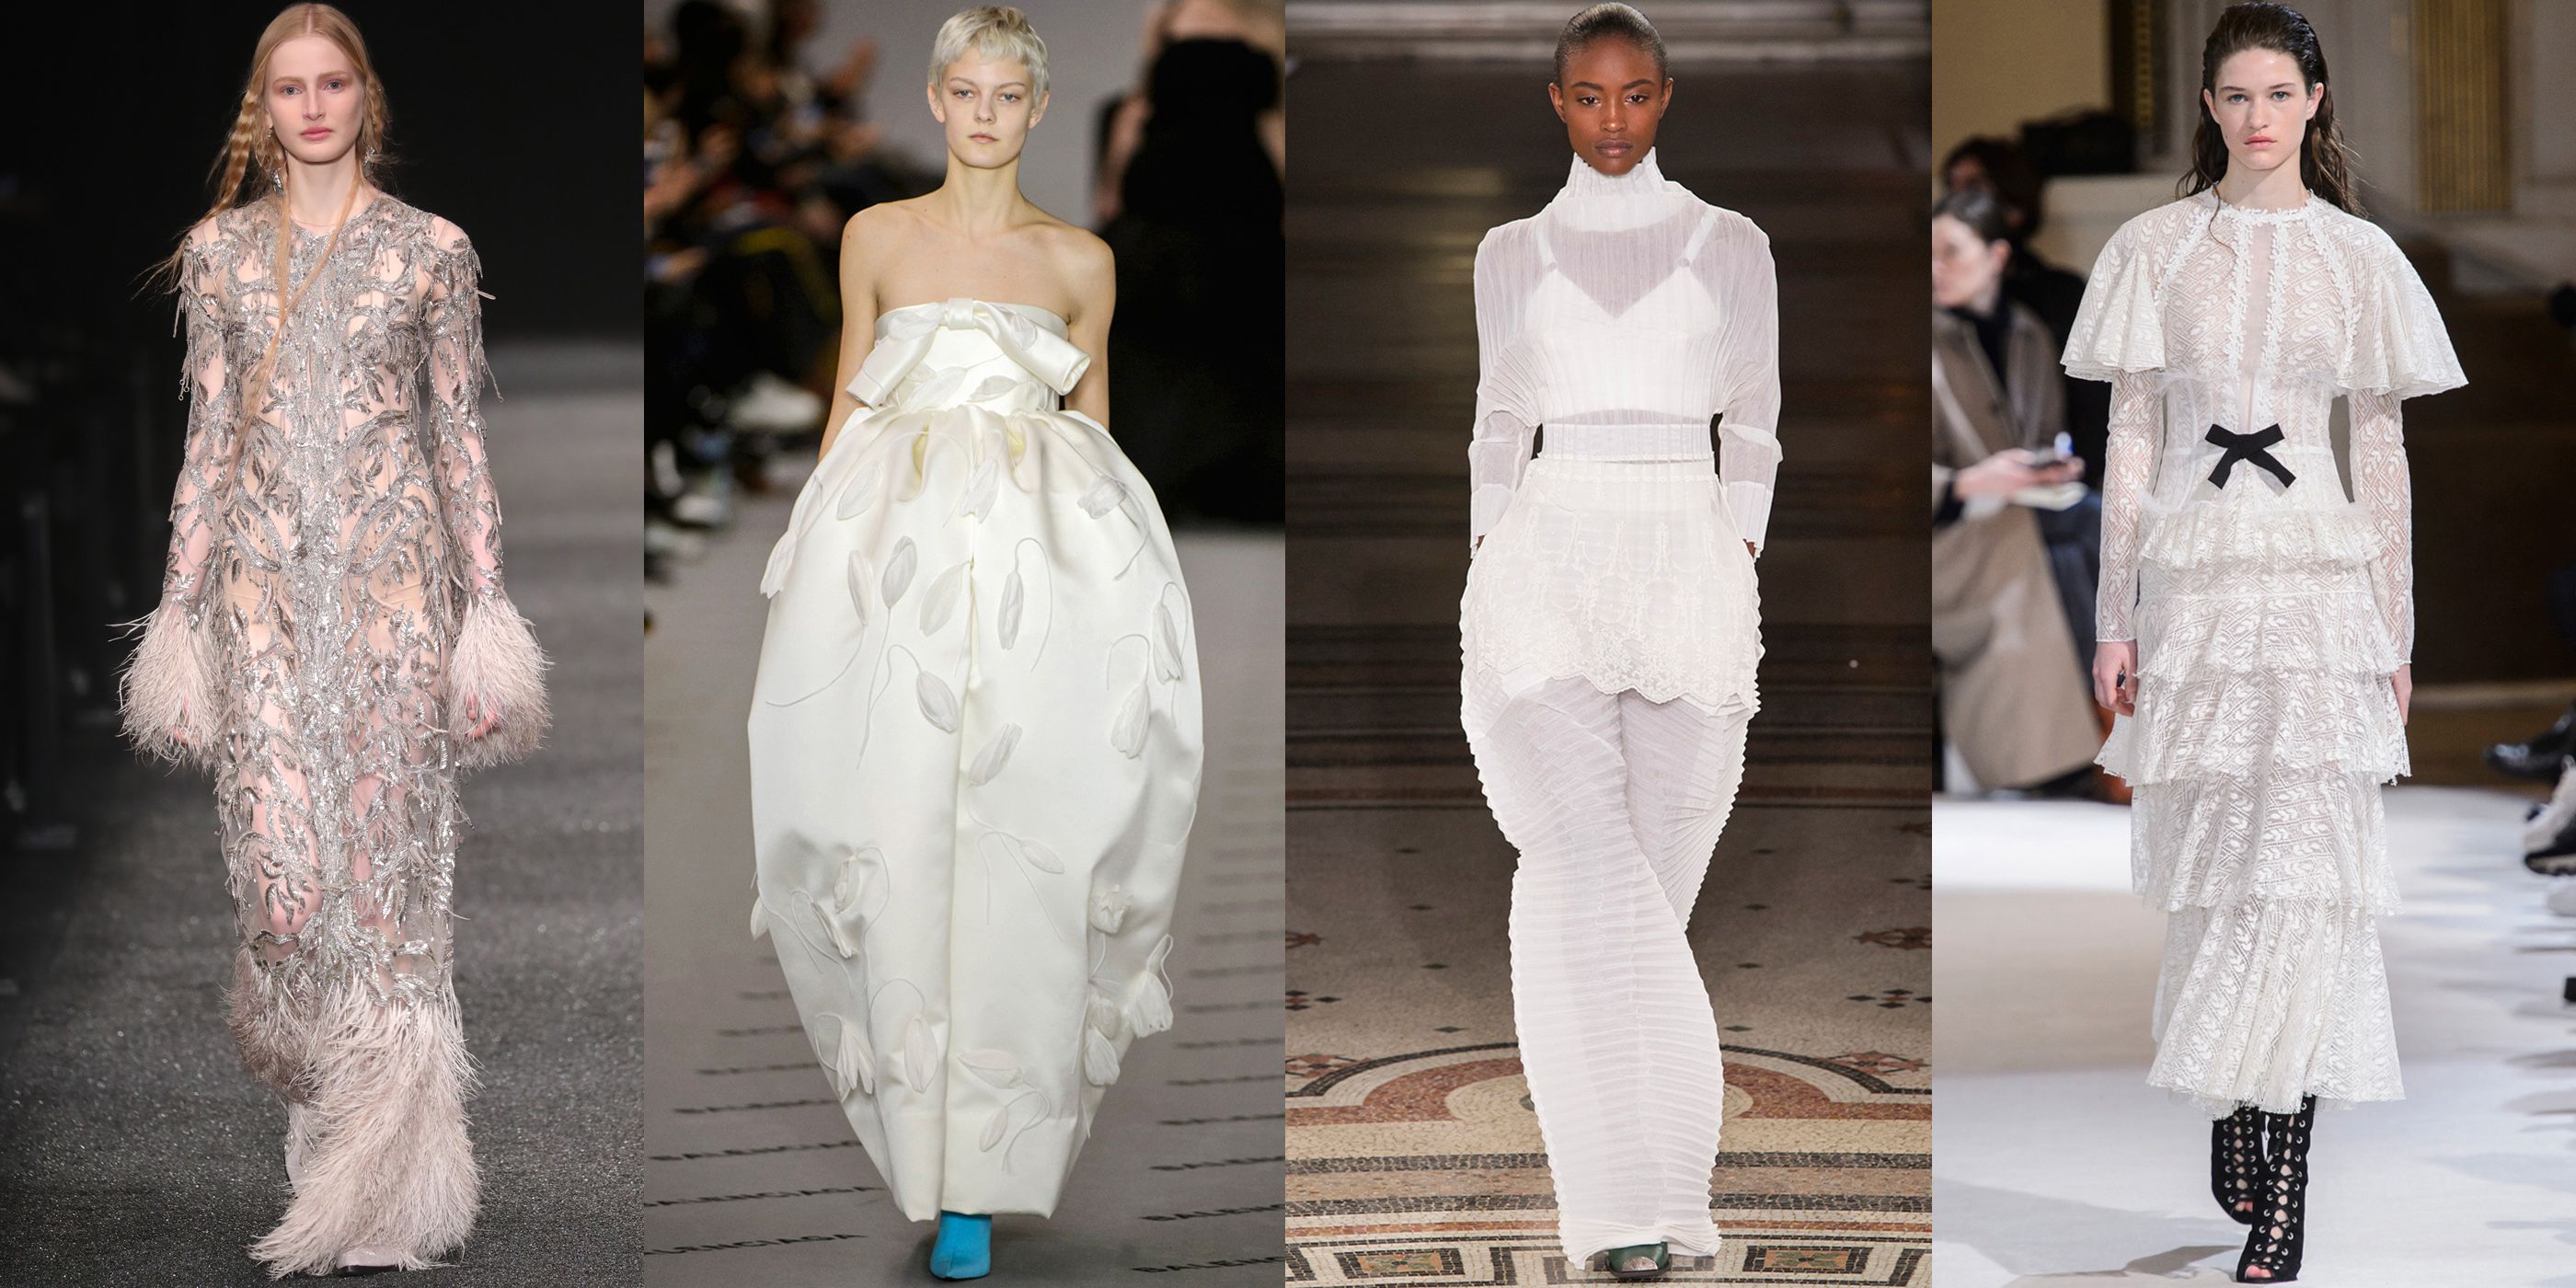 Models wearing a Moschino plastic bag, a Hefty bag dress topped